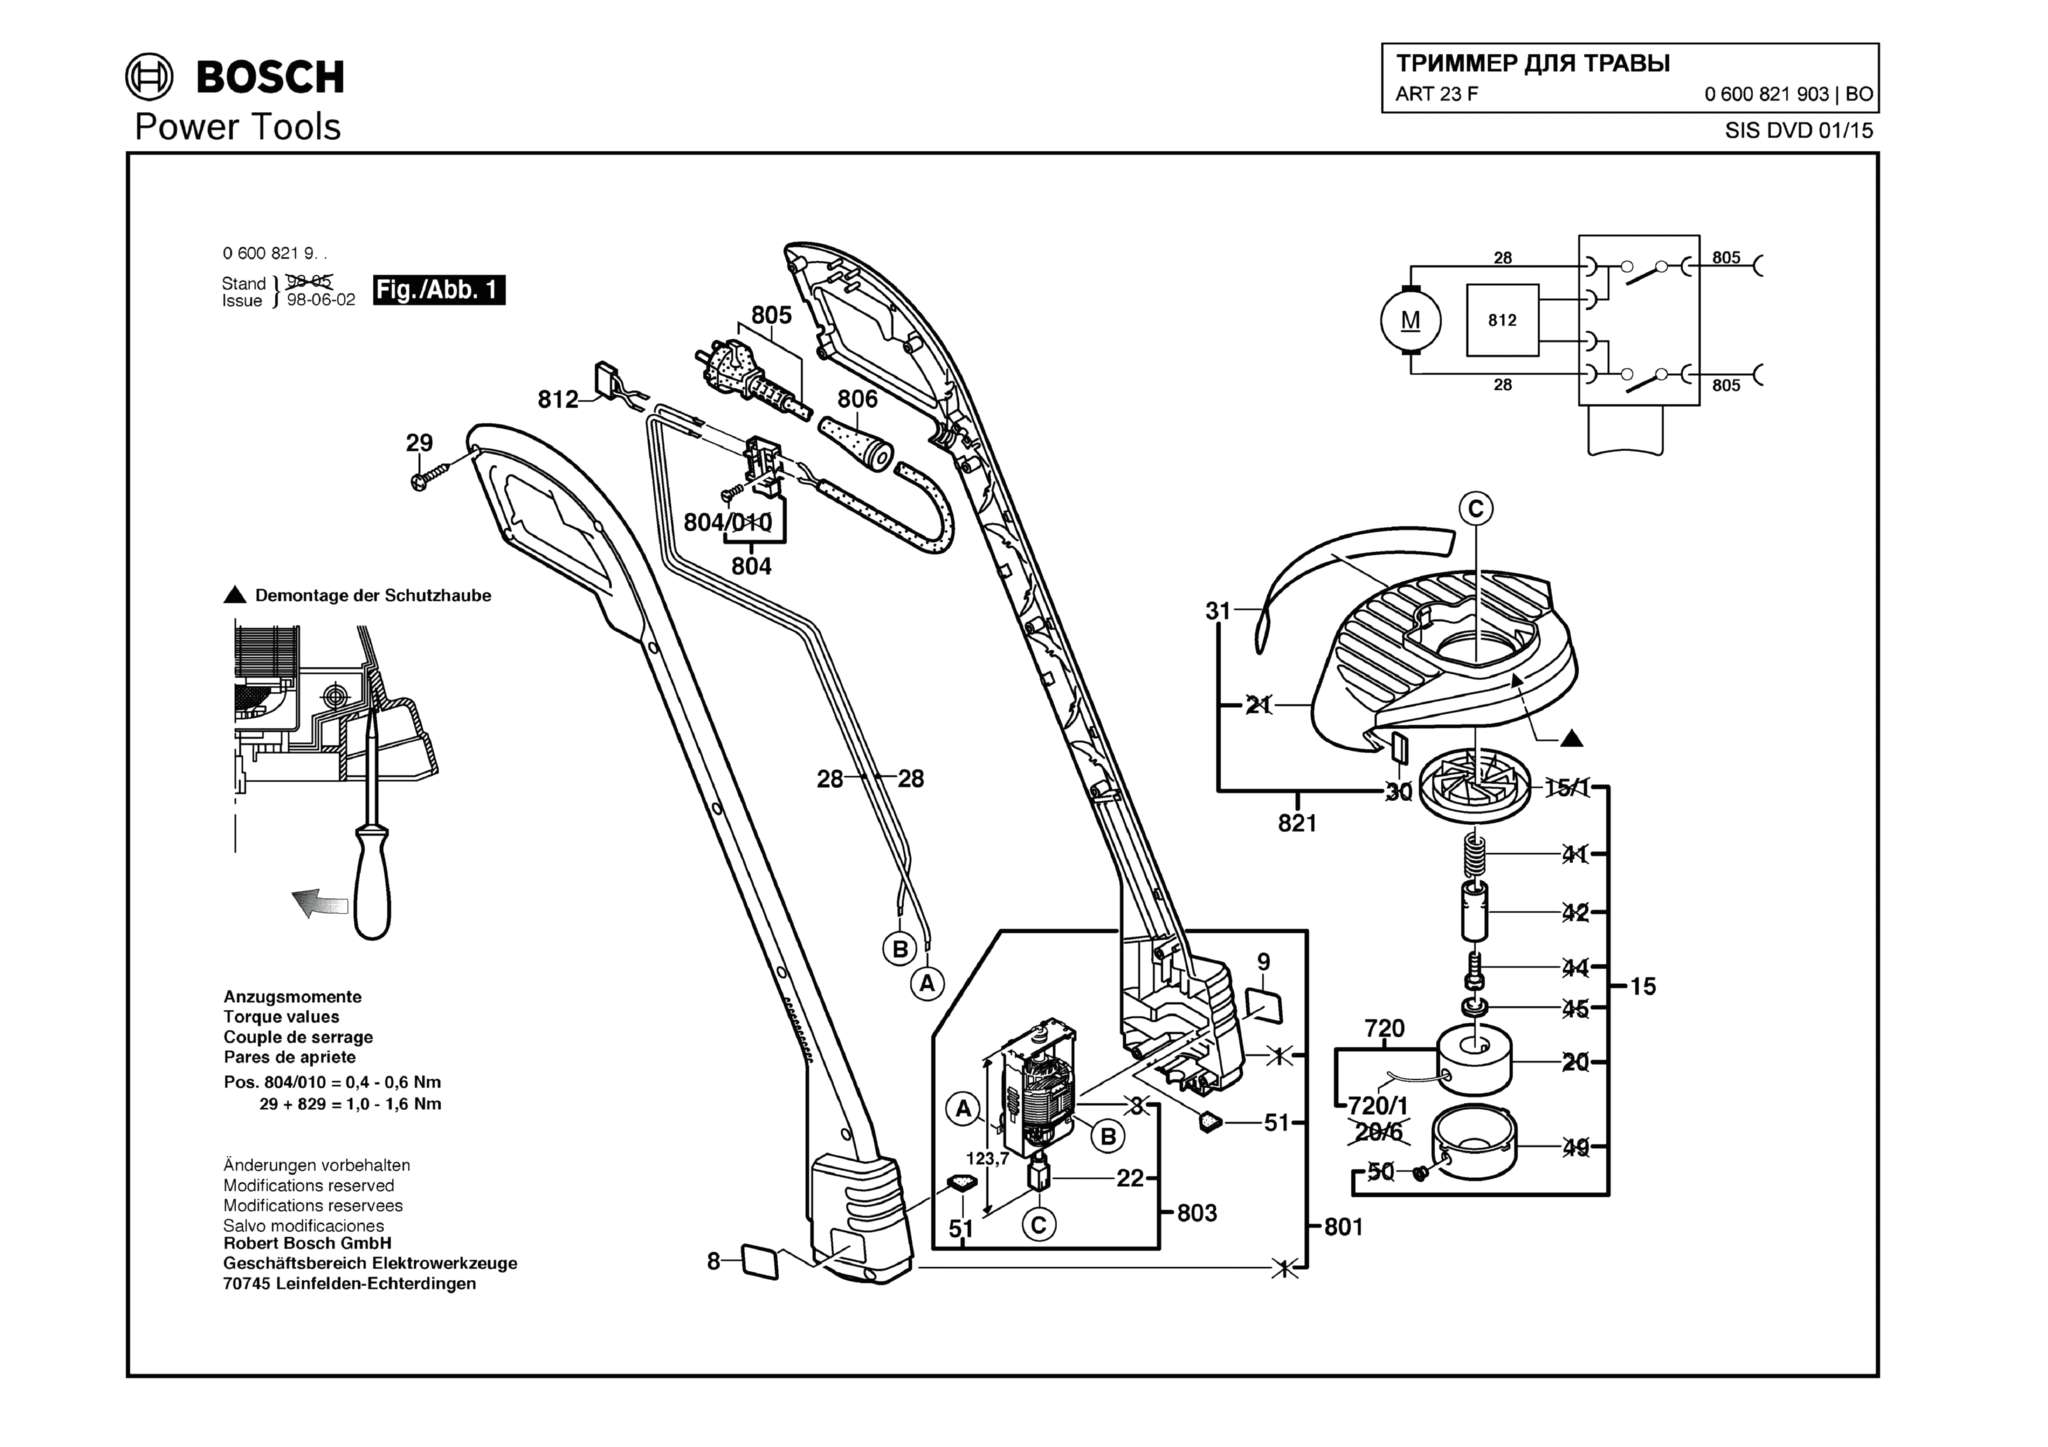 Запчасти, схема и деталировка Bosch ART 23 F (ТИП 0600821903)